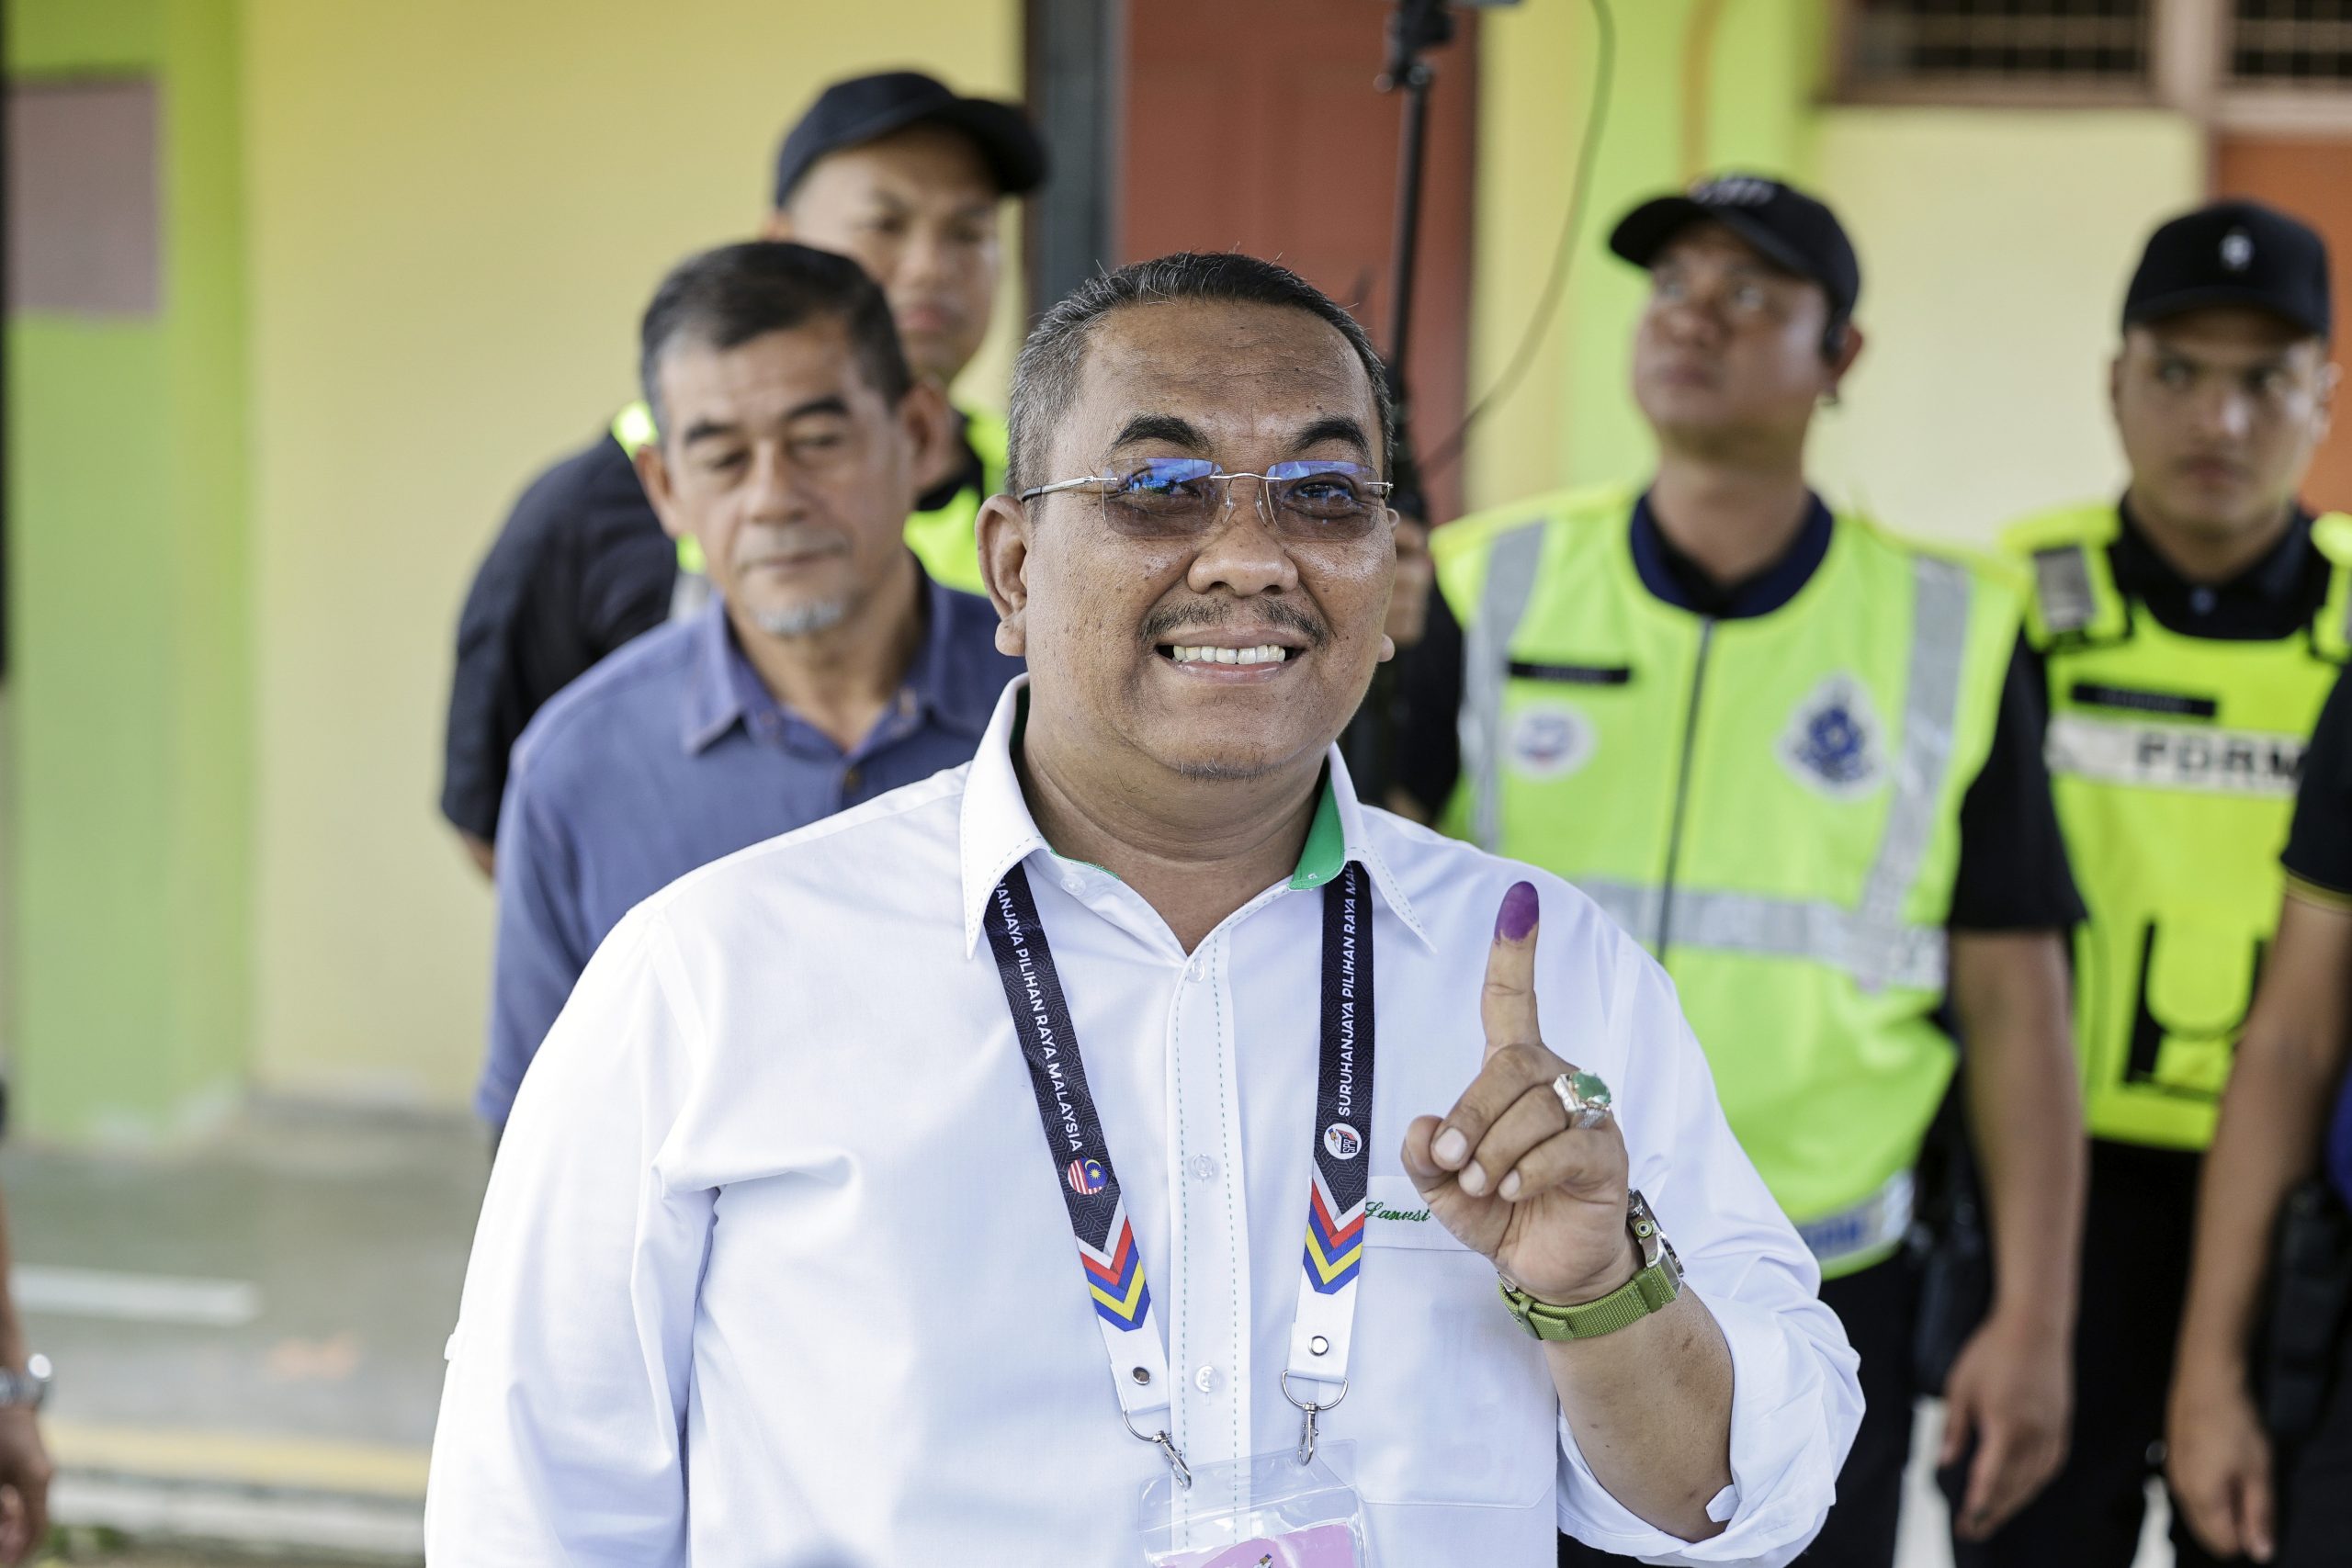 Tiada debaran kalah, Sanusi optimis PN menang di Kedah